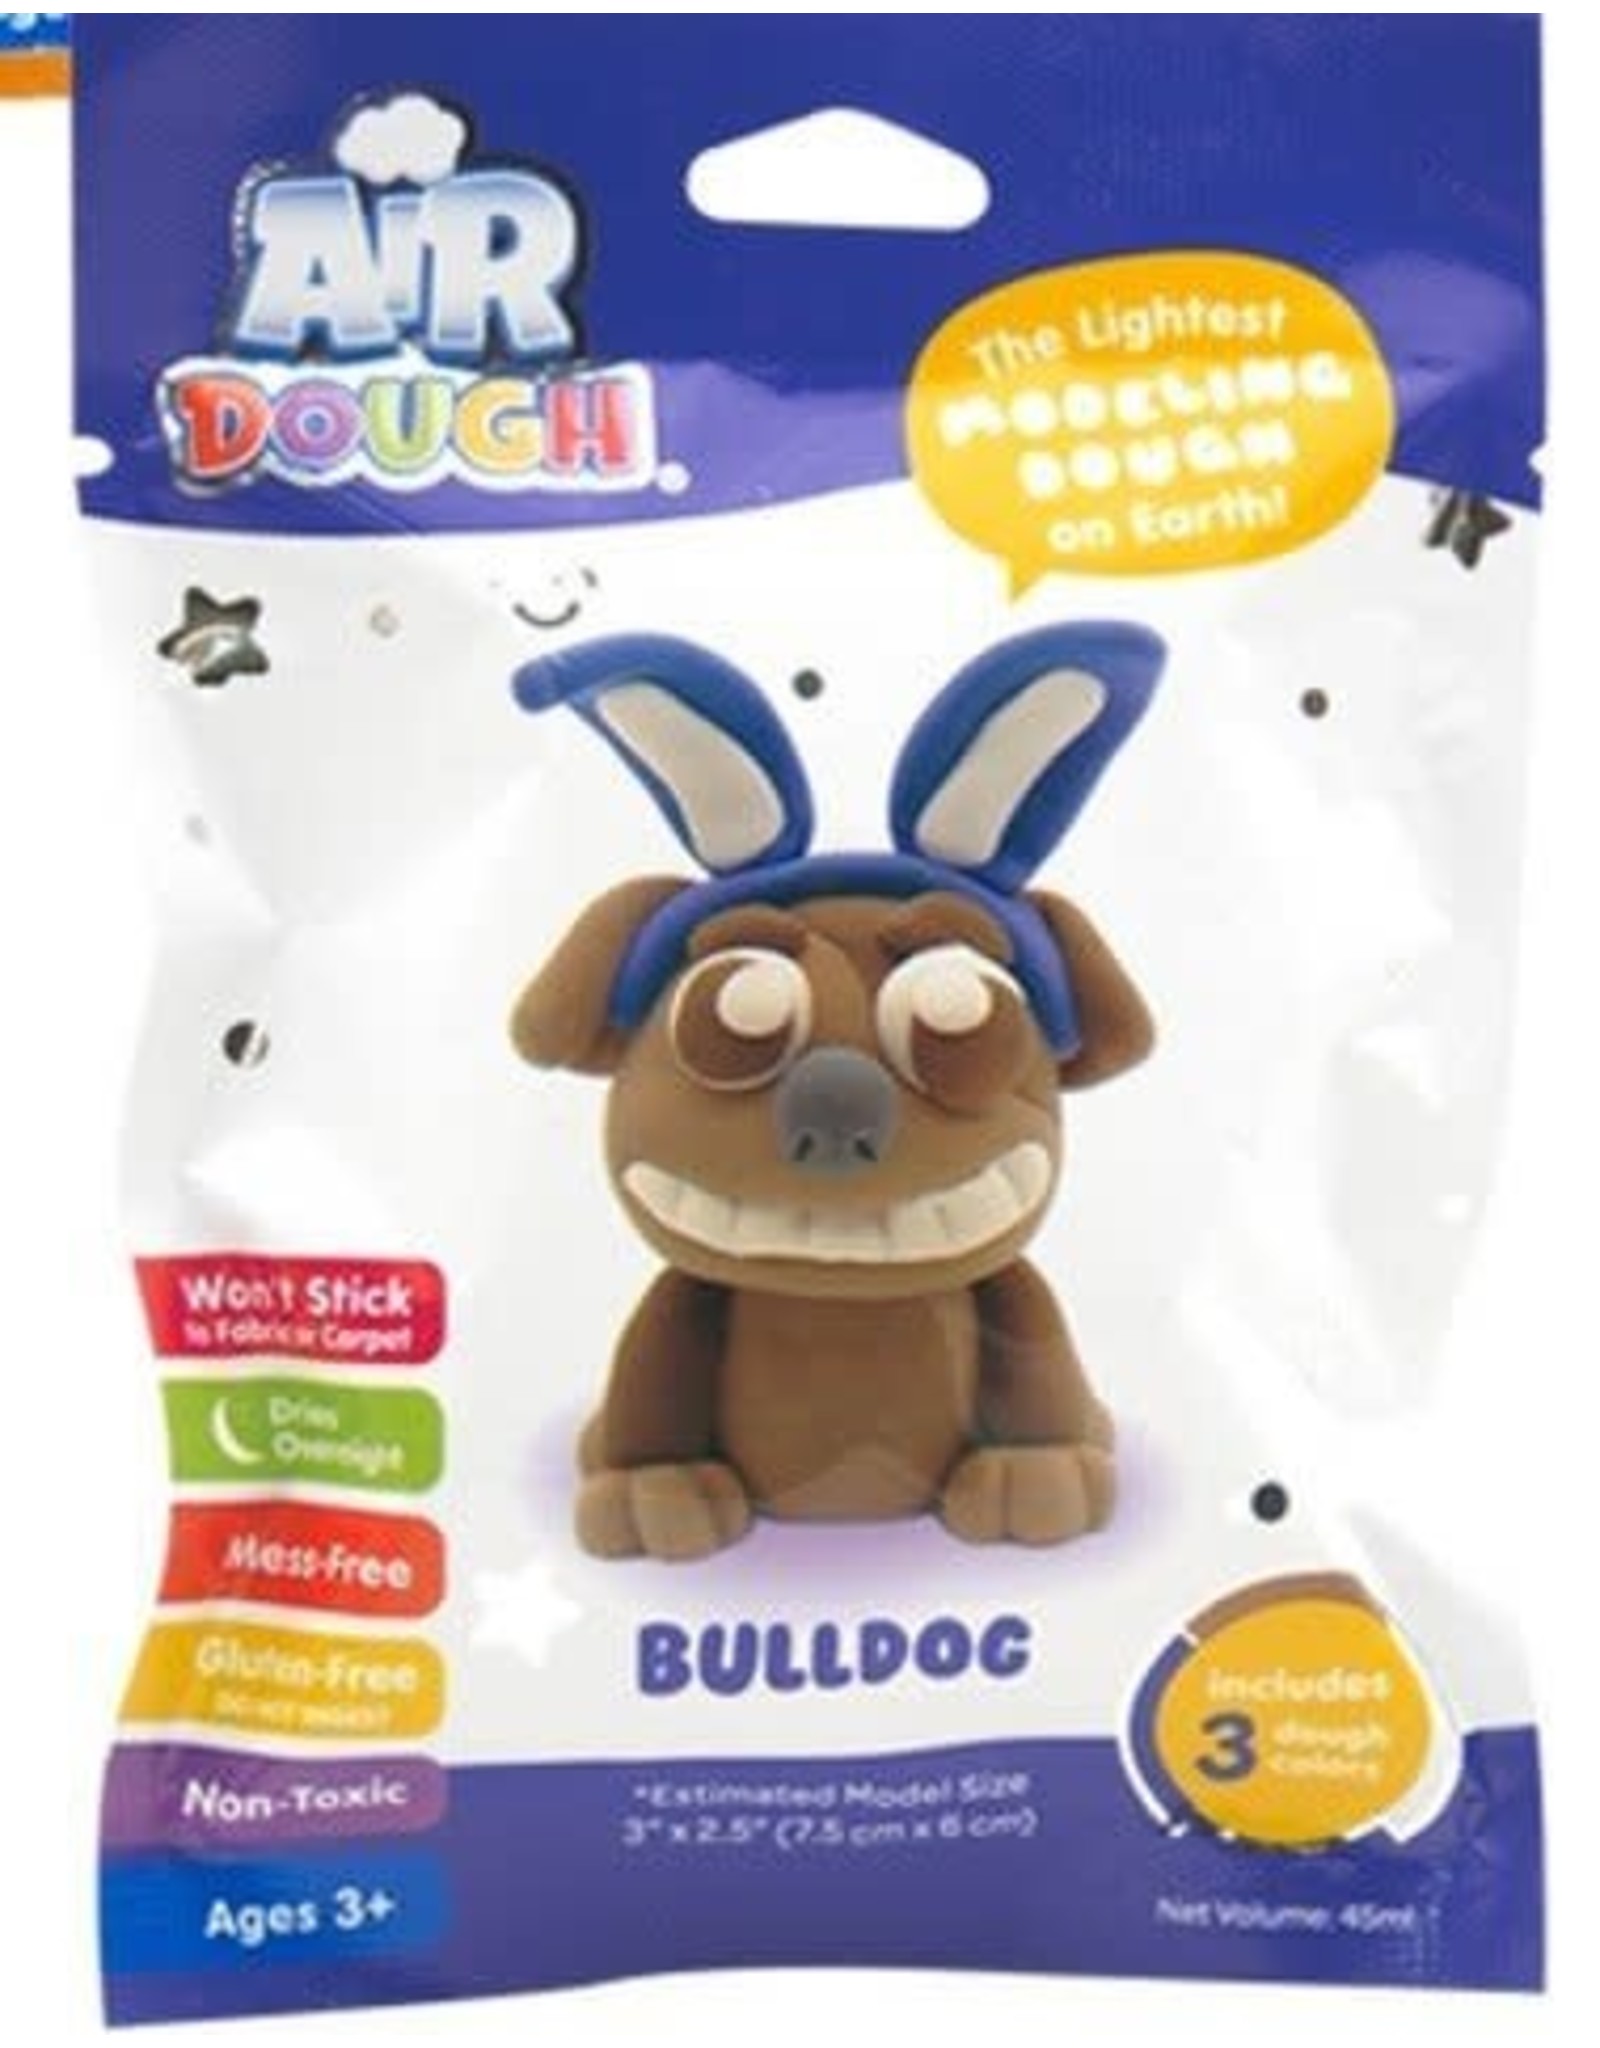 Scentco Bulldog Air Dough Foil Bag